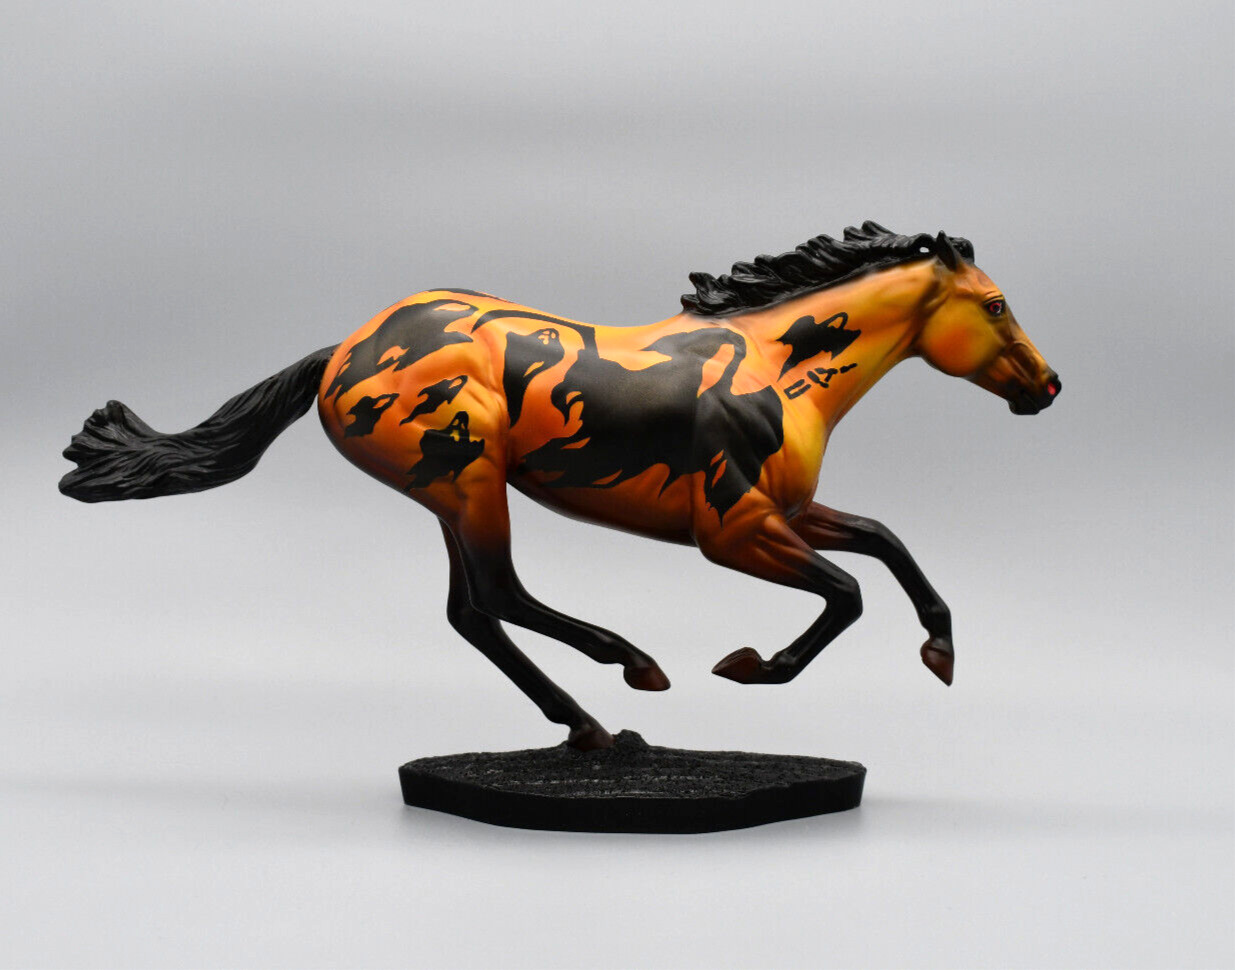 Breyer Phantasma Halloween Horse Model #710005 - Smarty Jones Mold - 1:9